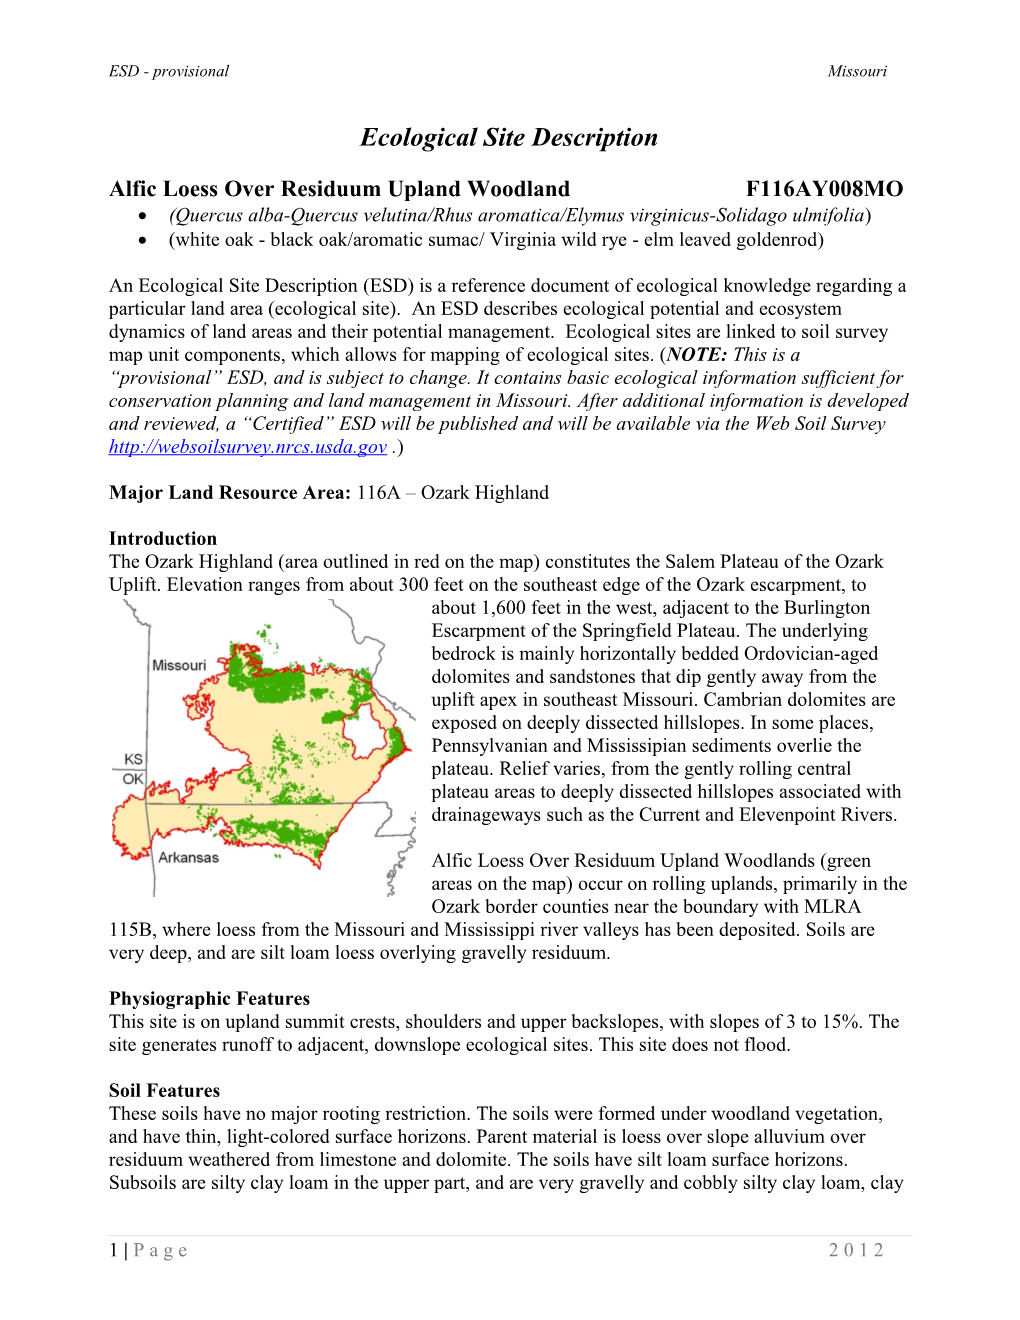 Alfic Loess Over Residuum Upland Woodlandf116ay008mo